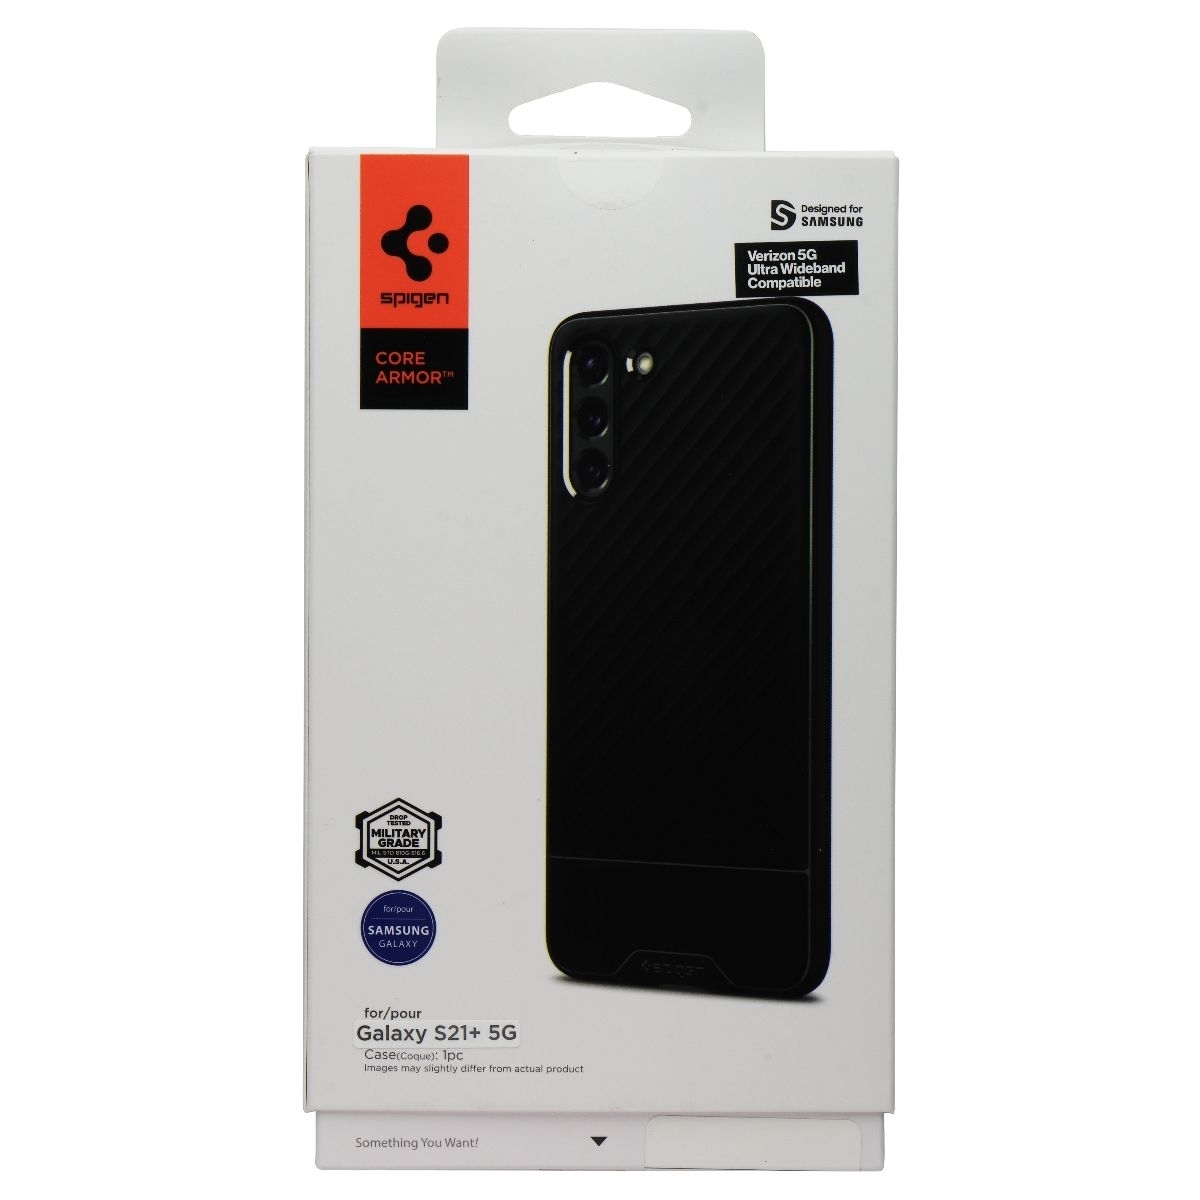 Spigen Core Armor Series Case For Samsung Galaxy (S21+) 5G - Black (Refurbished)